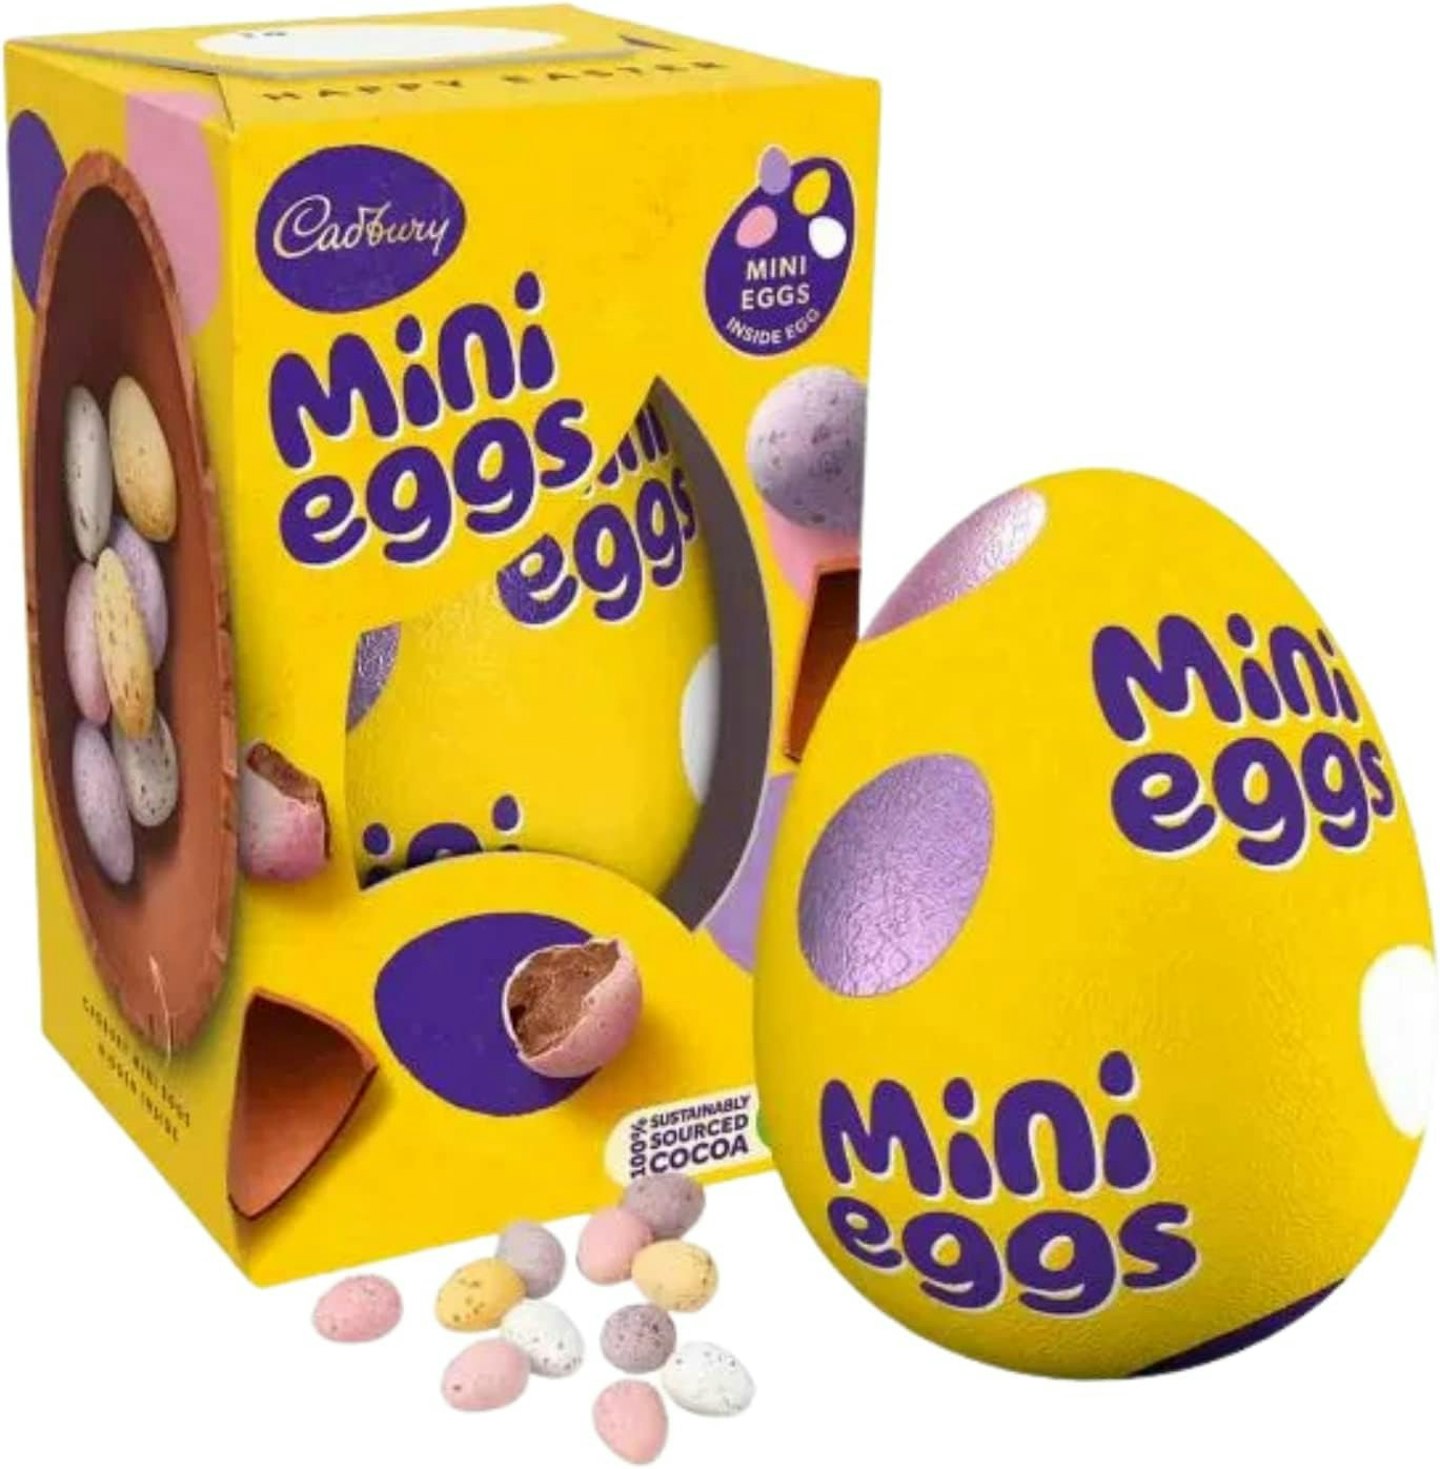 Easter egg Cadbury 